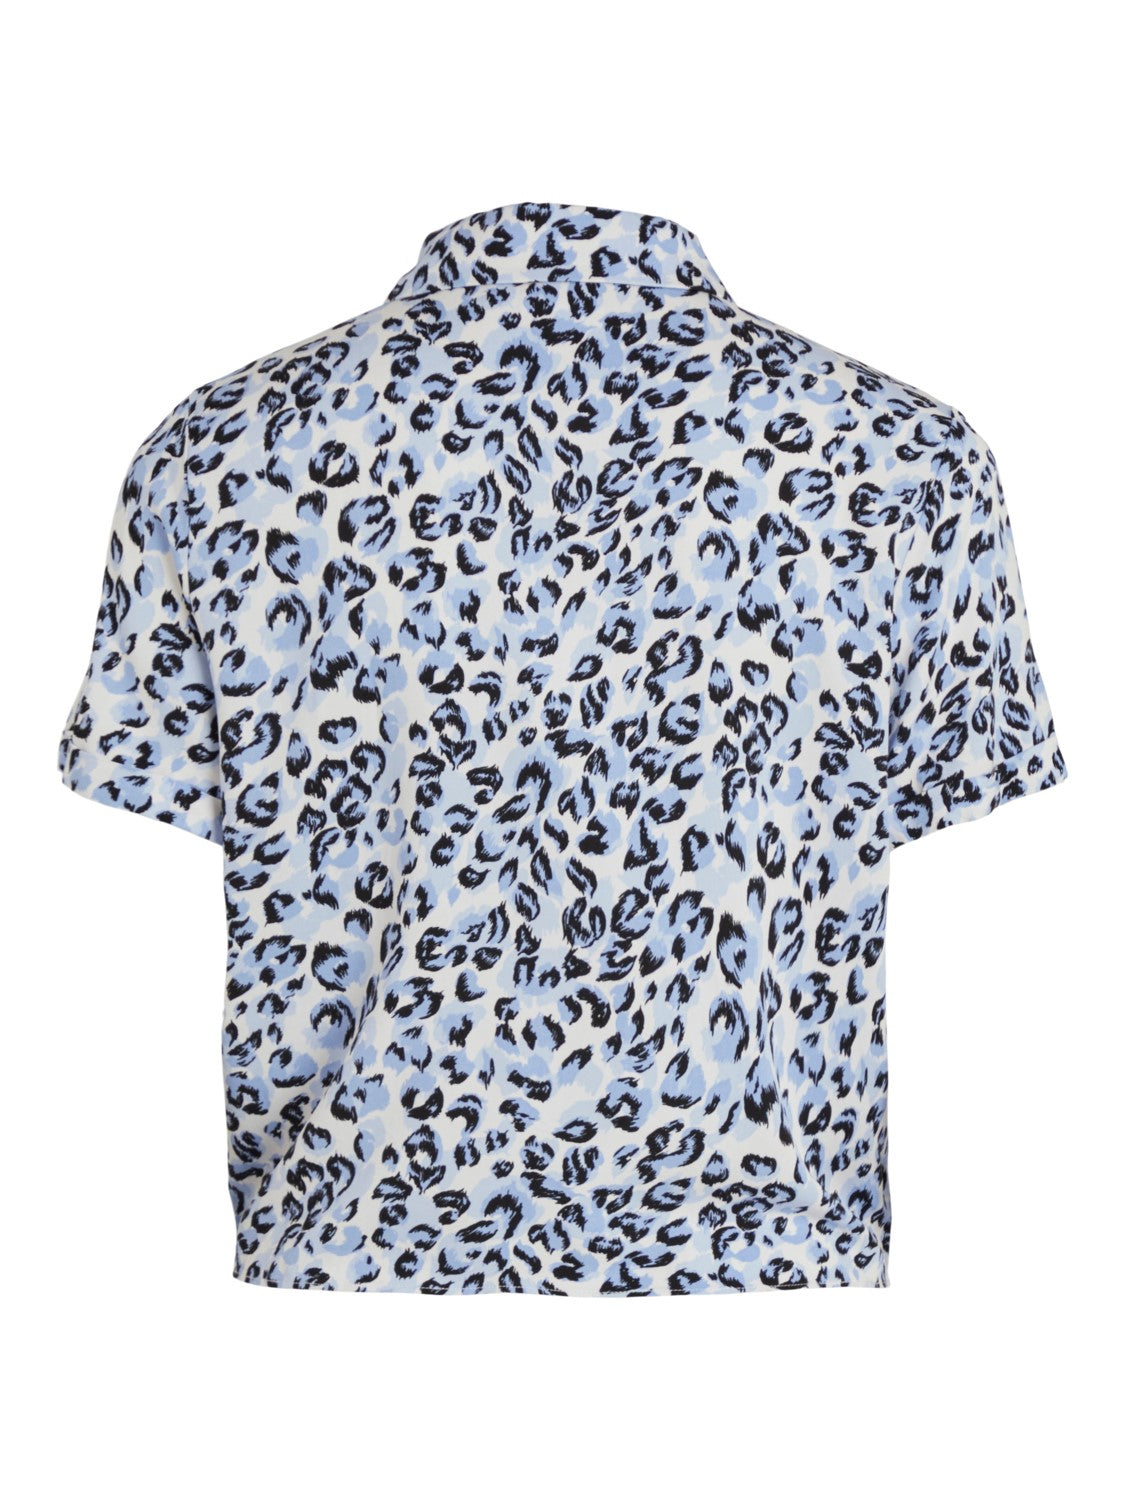 Vimoras Tie Waist Shirt (Blue Leopard)